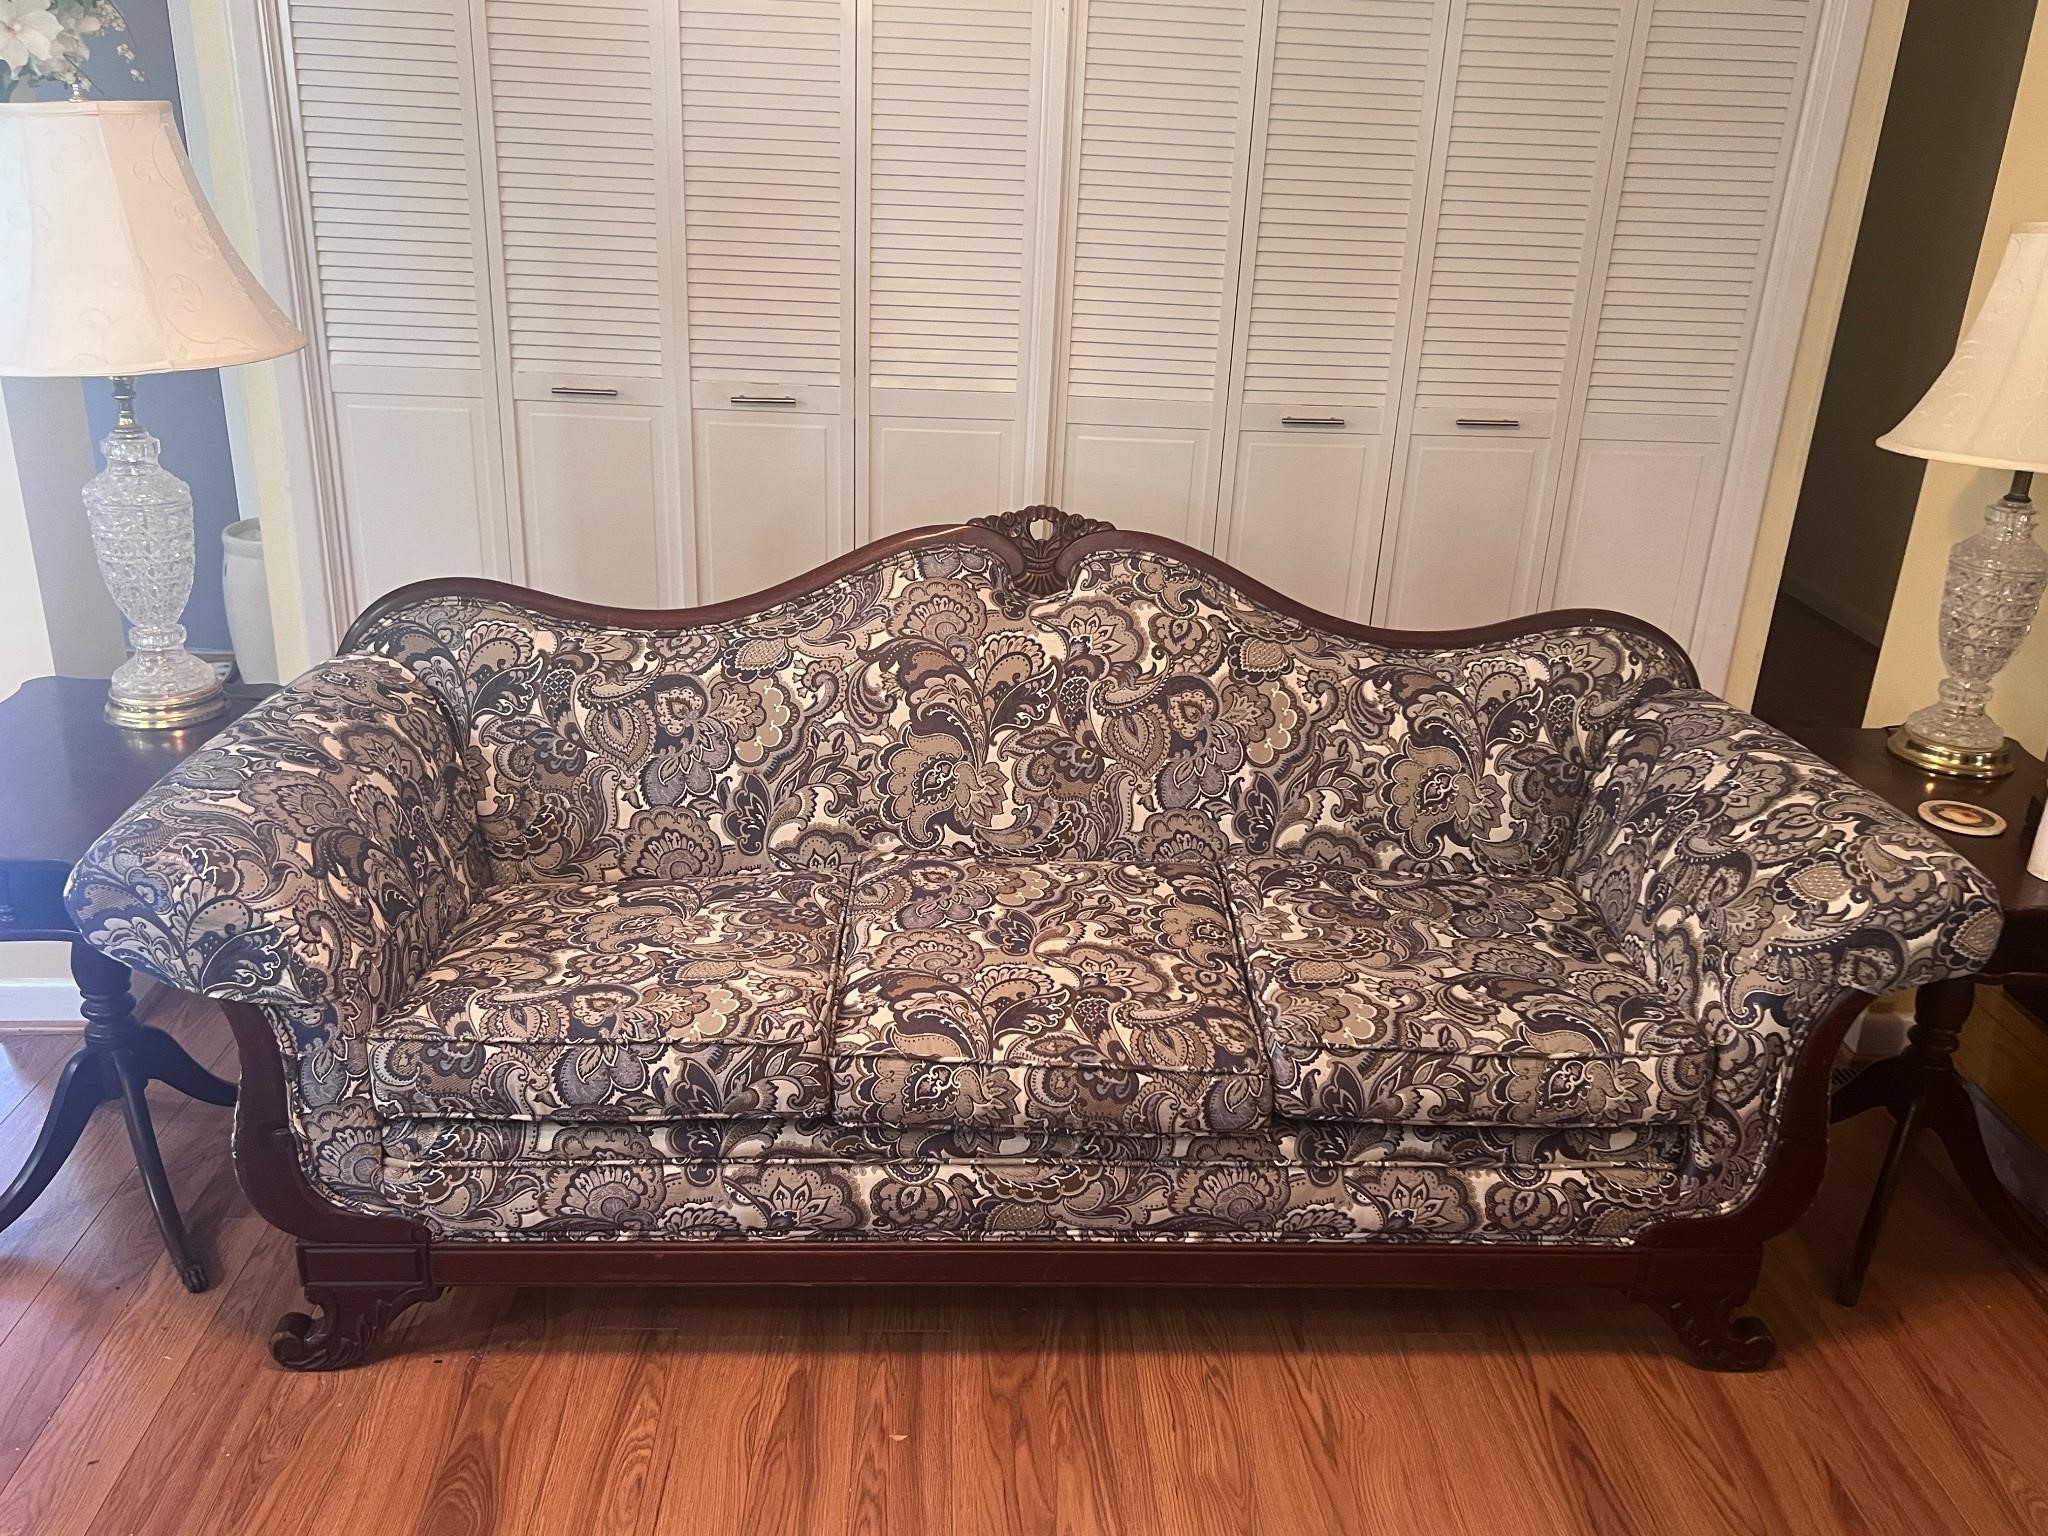 Duncan Phyfe style sofa beautiful upholstery